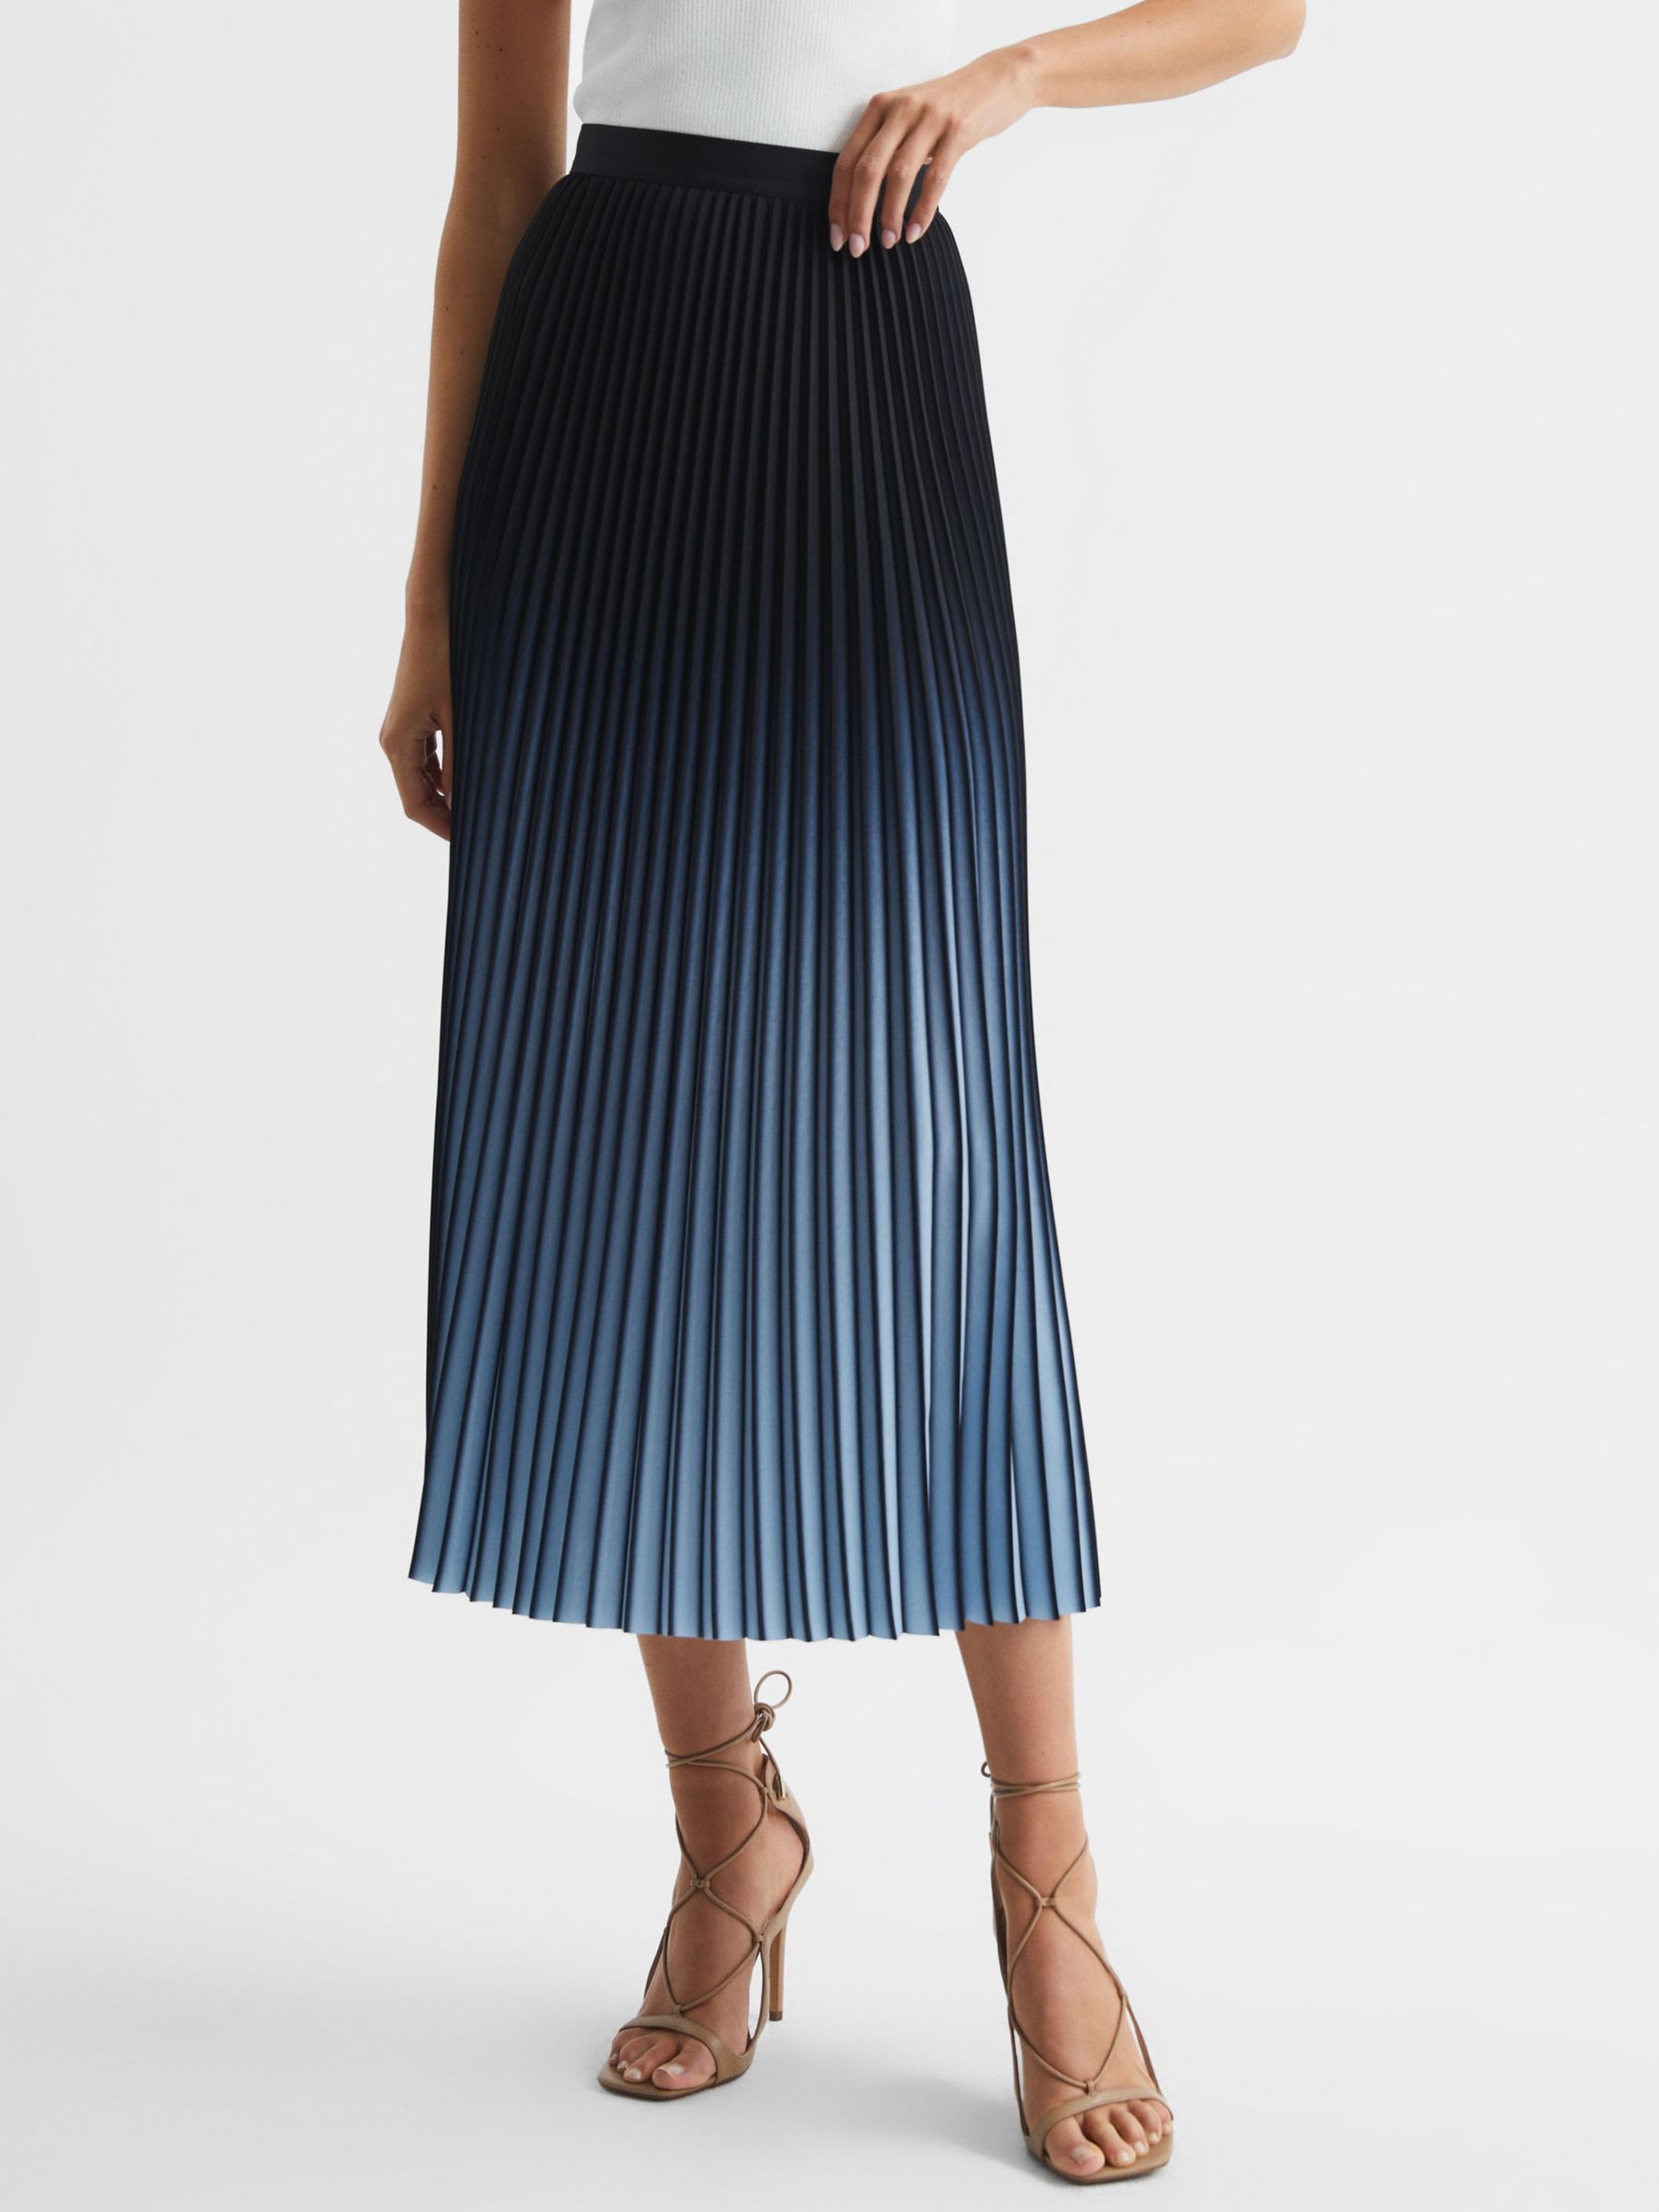 Reiss Marlie Plisse Midi Skirt, Bright Blue at John Lewis & Partners